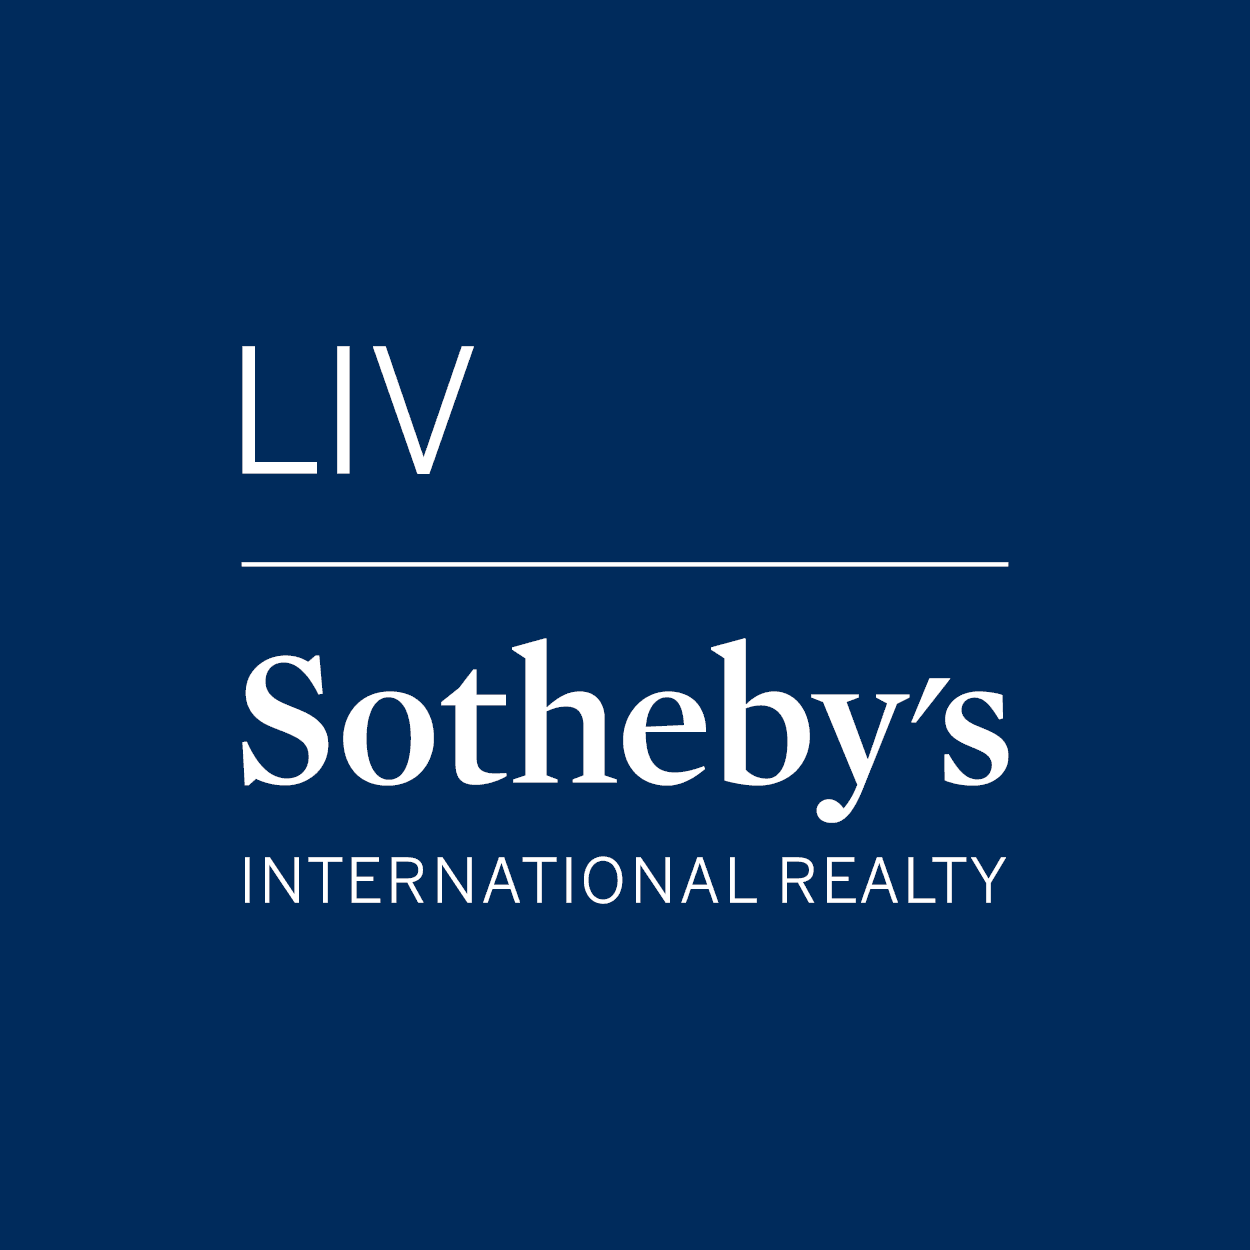 Liv Sotheby's